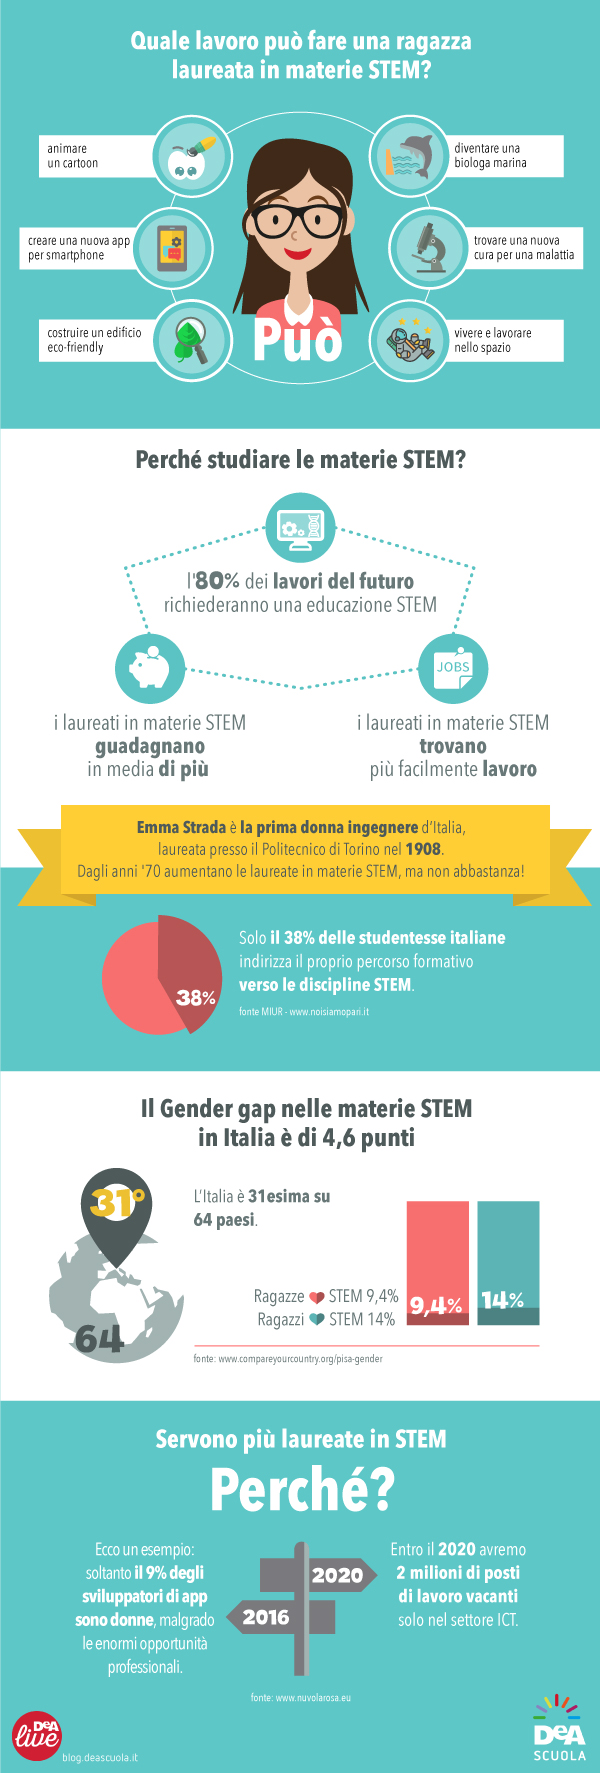 DeA_STEM_infografica_corpo